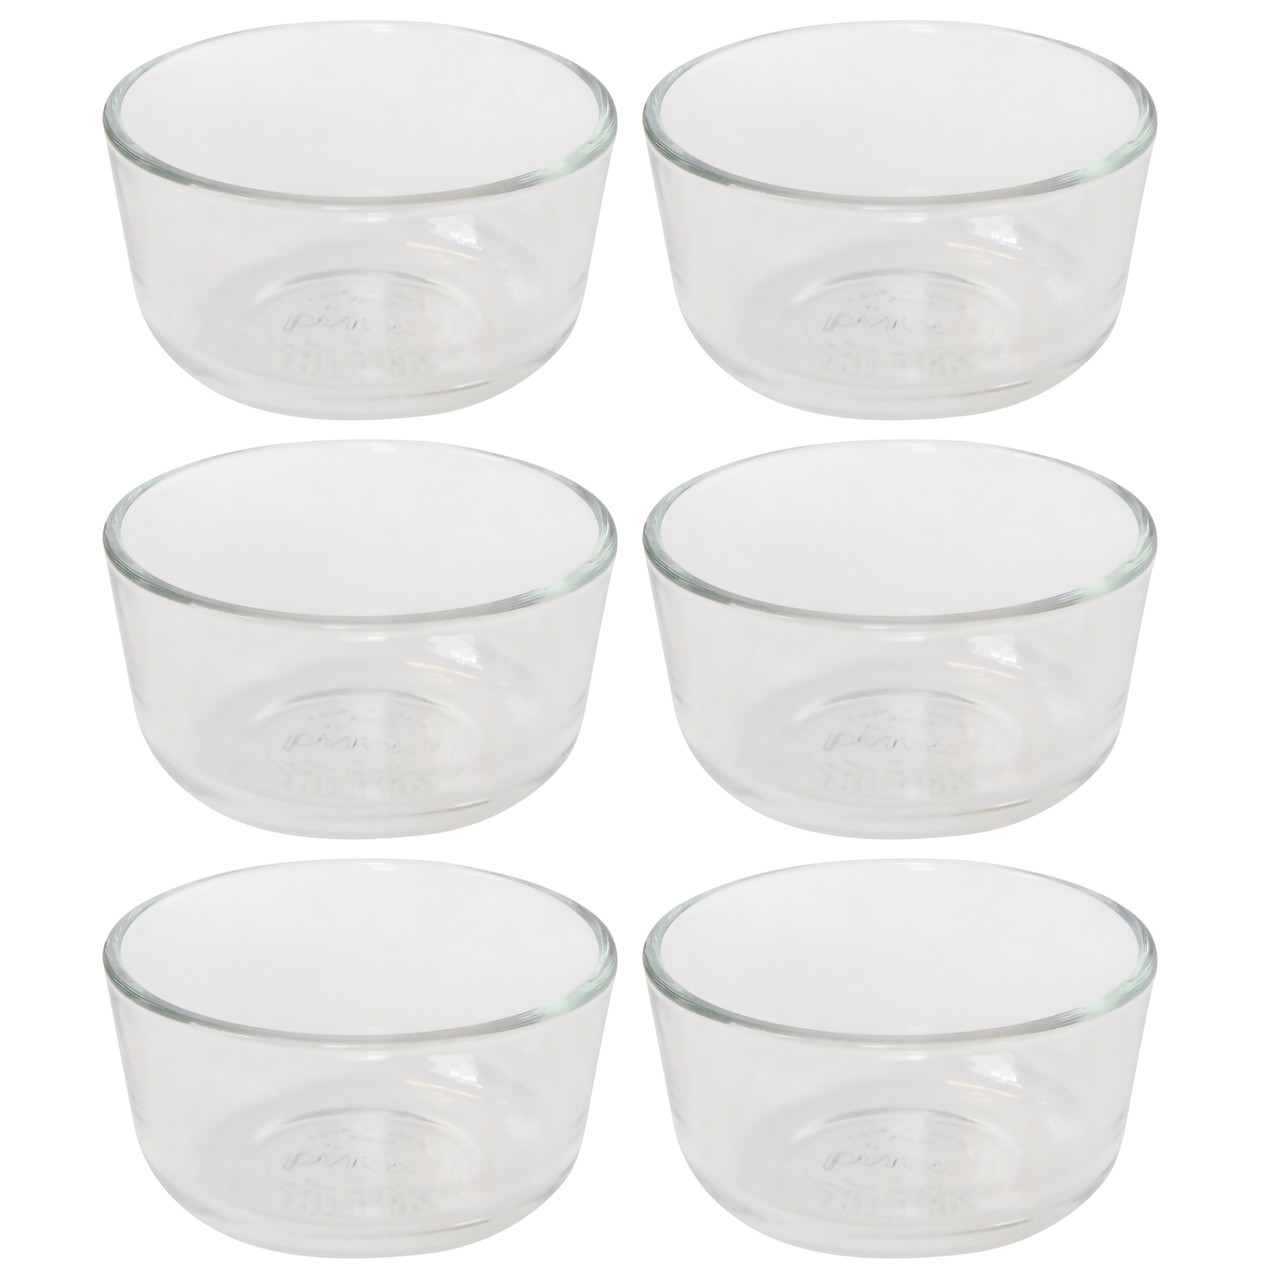 6 Piece Borosilicate Glass Prep Bowl Set with Plastic Lids - 6